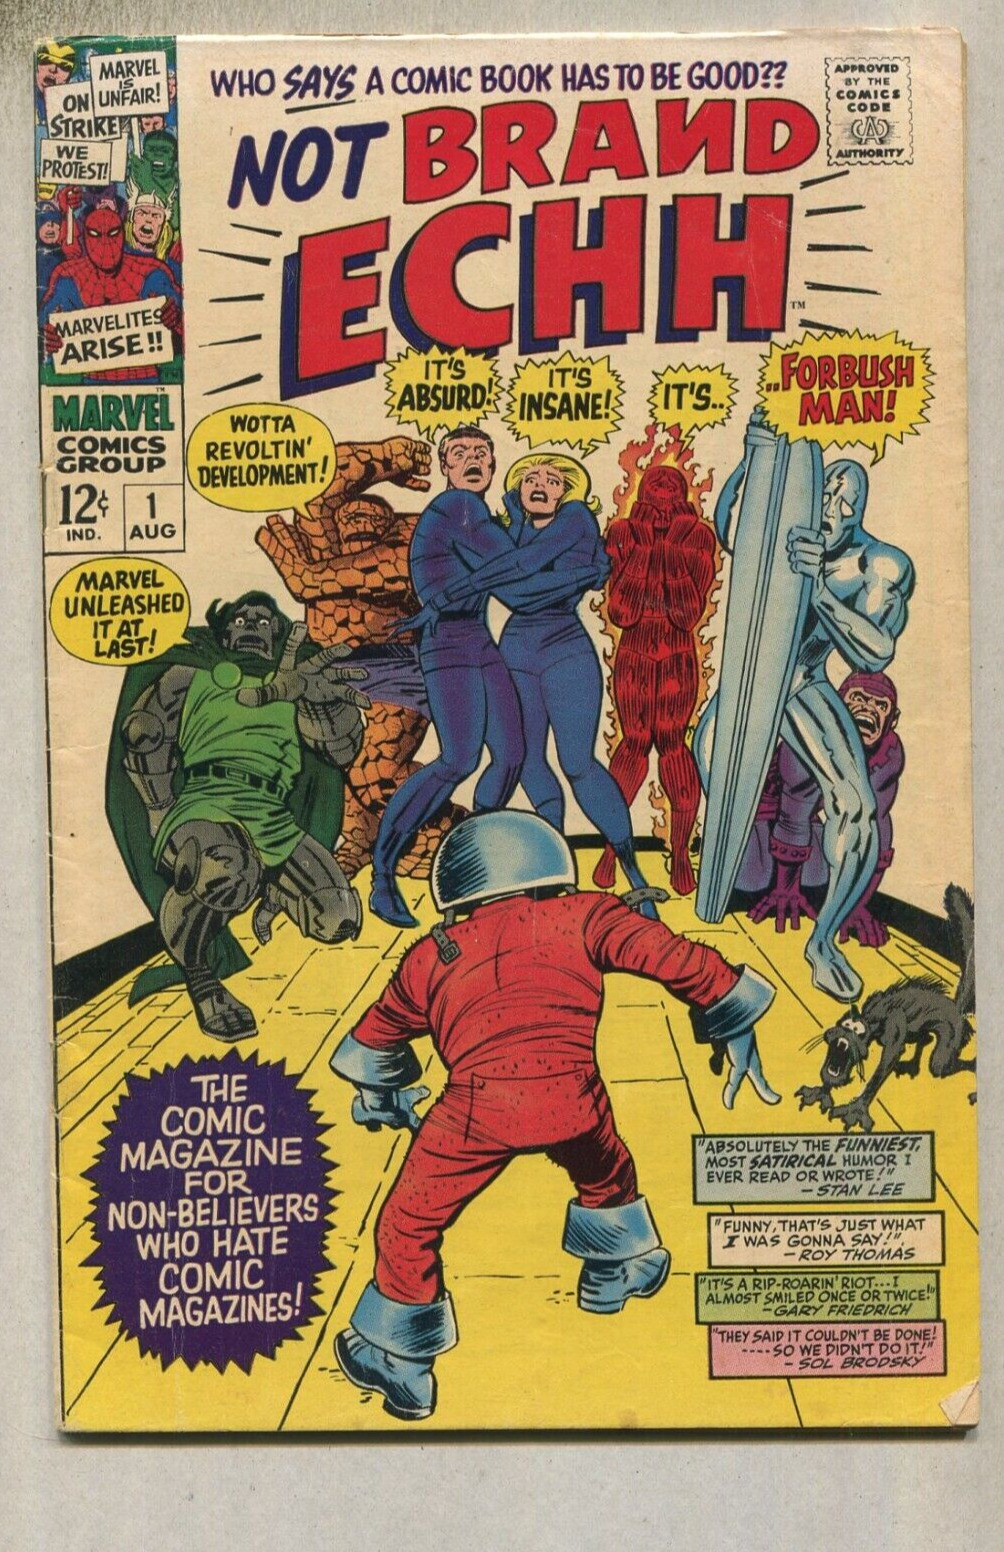 Not Brand ECHH #1 VG+ Forbush Man  Marvel Comics SA